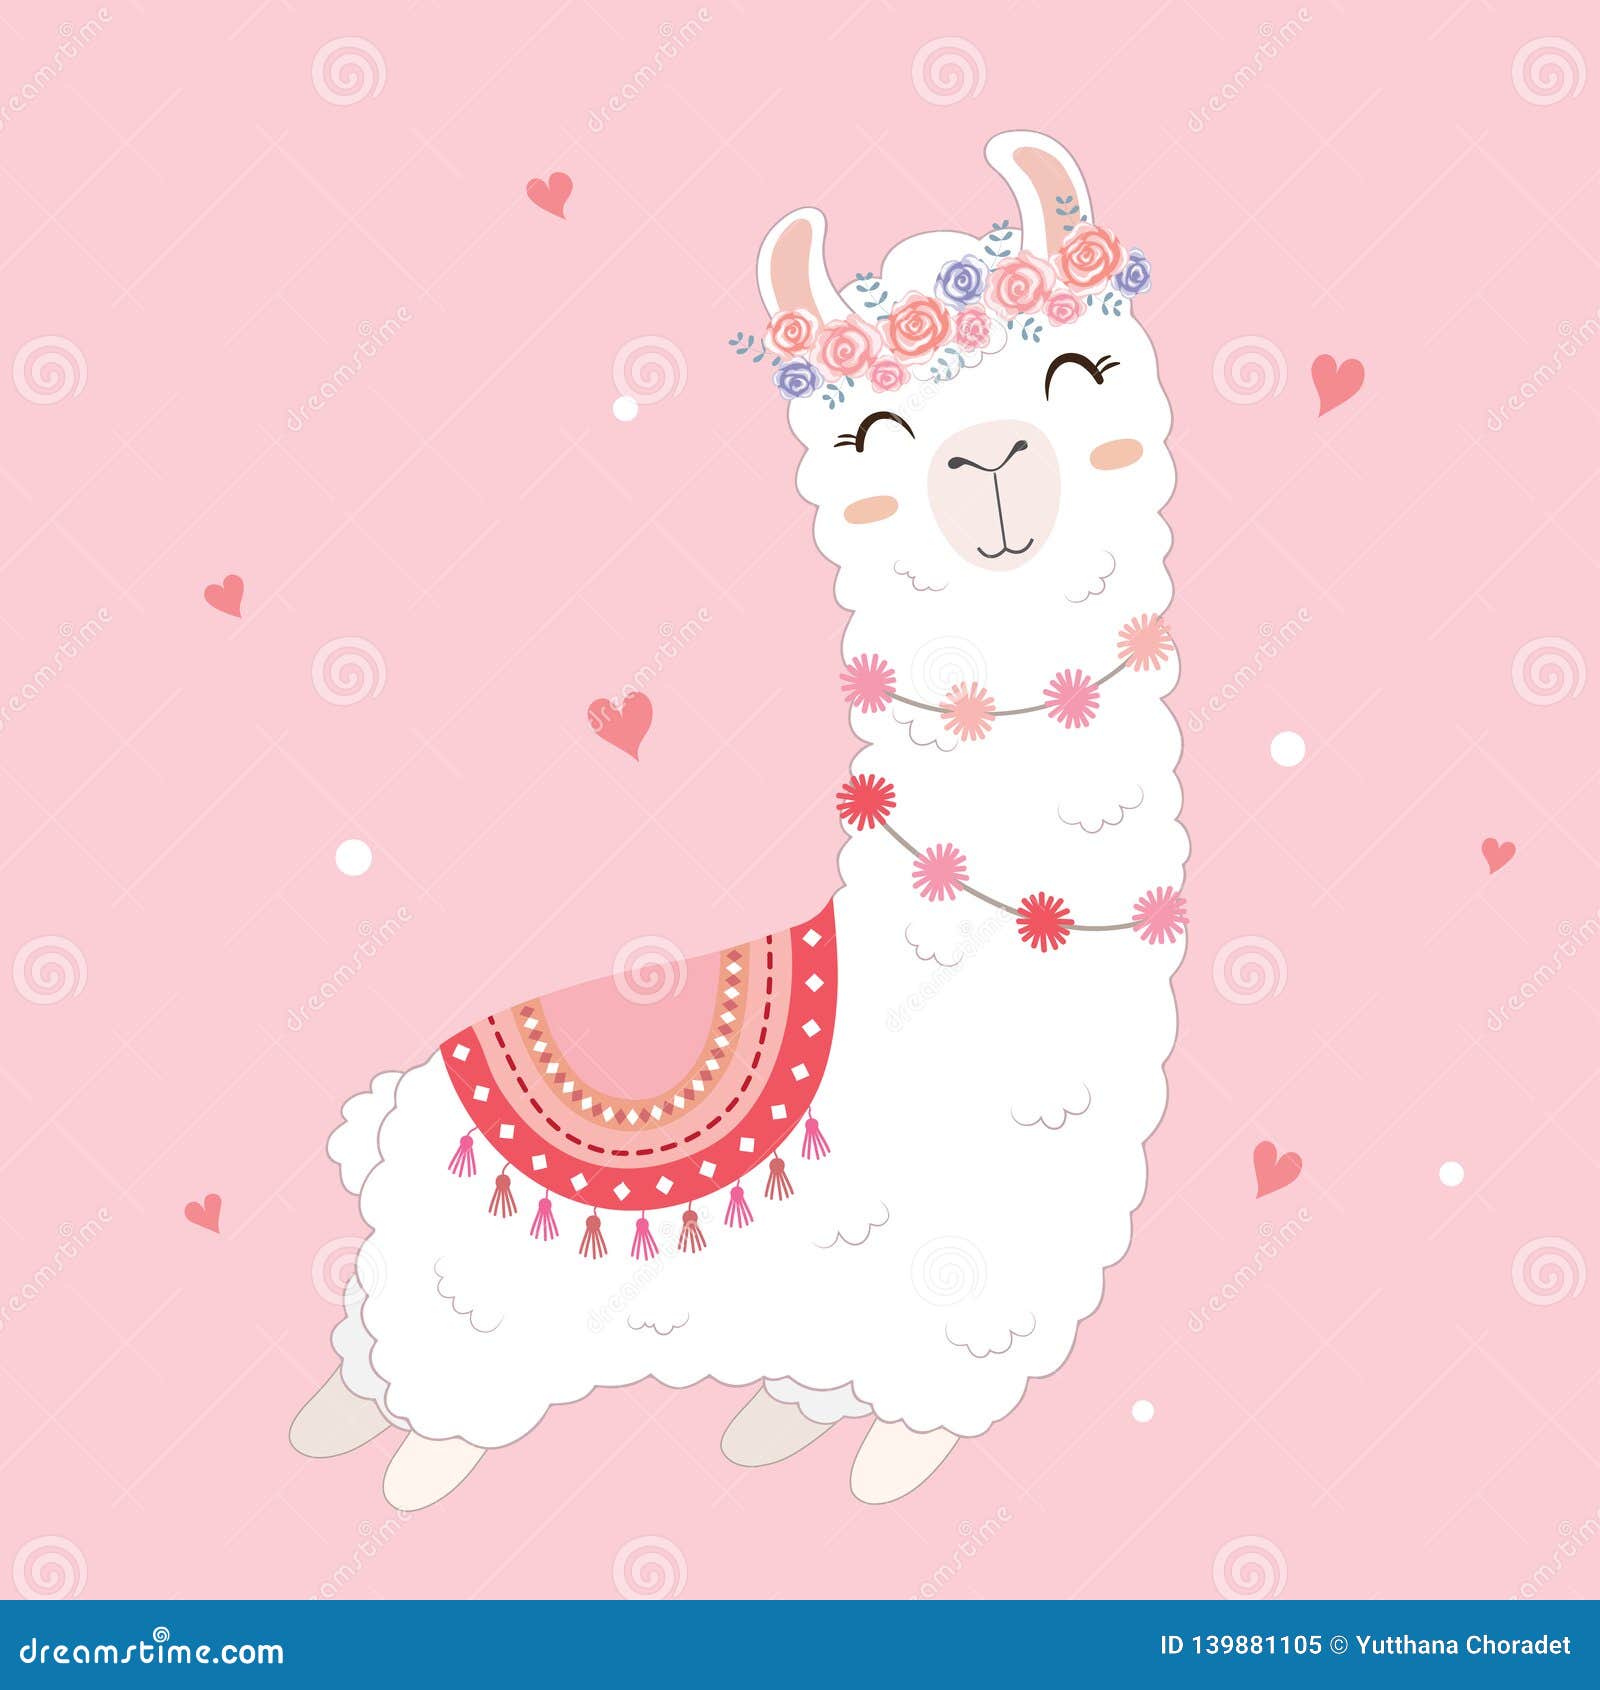 valentine`s day card featuring a cute llama